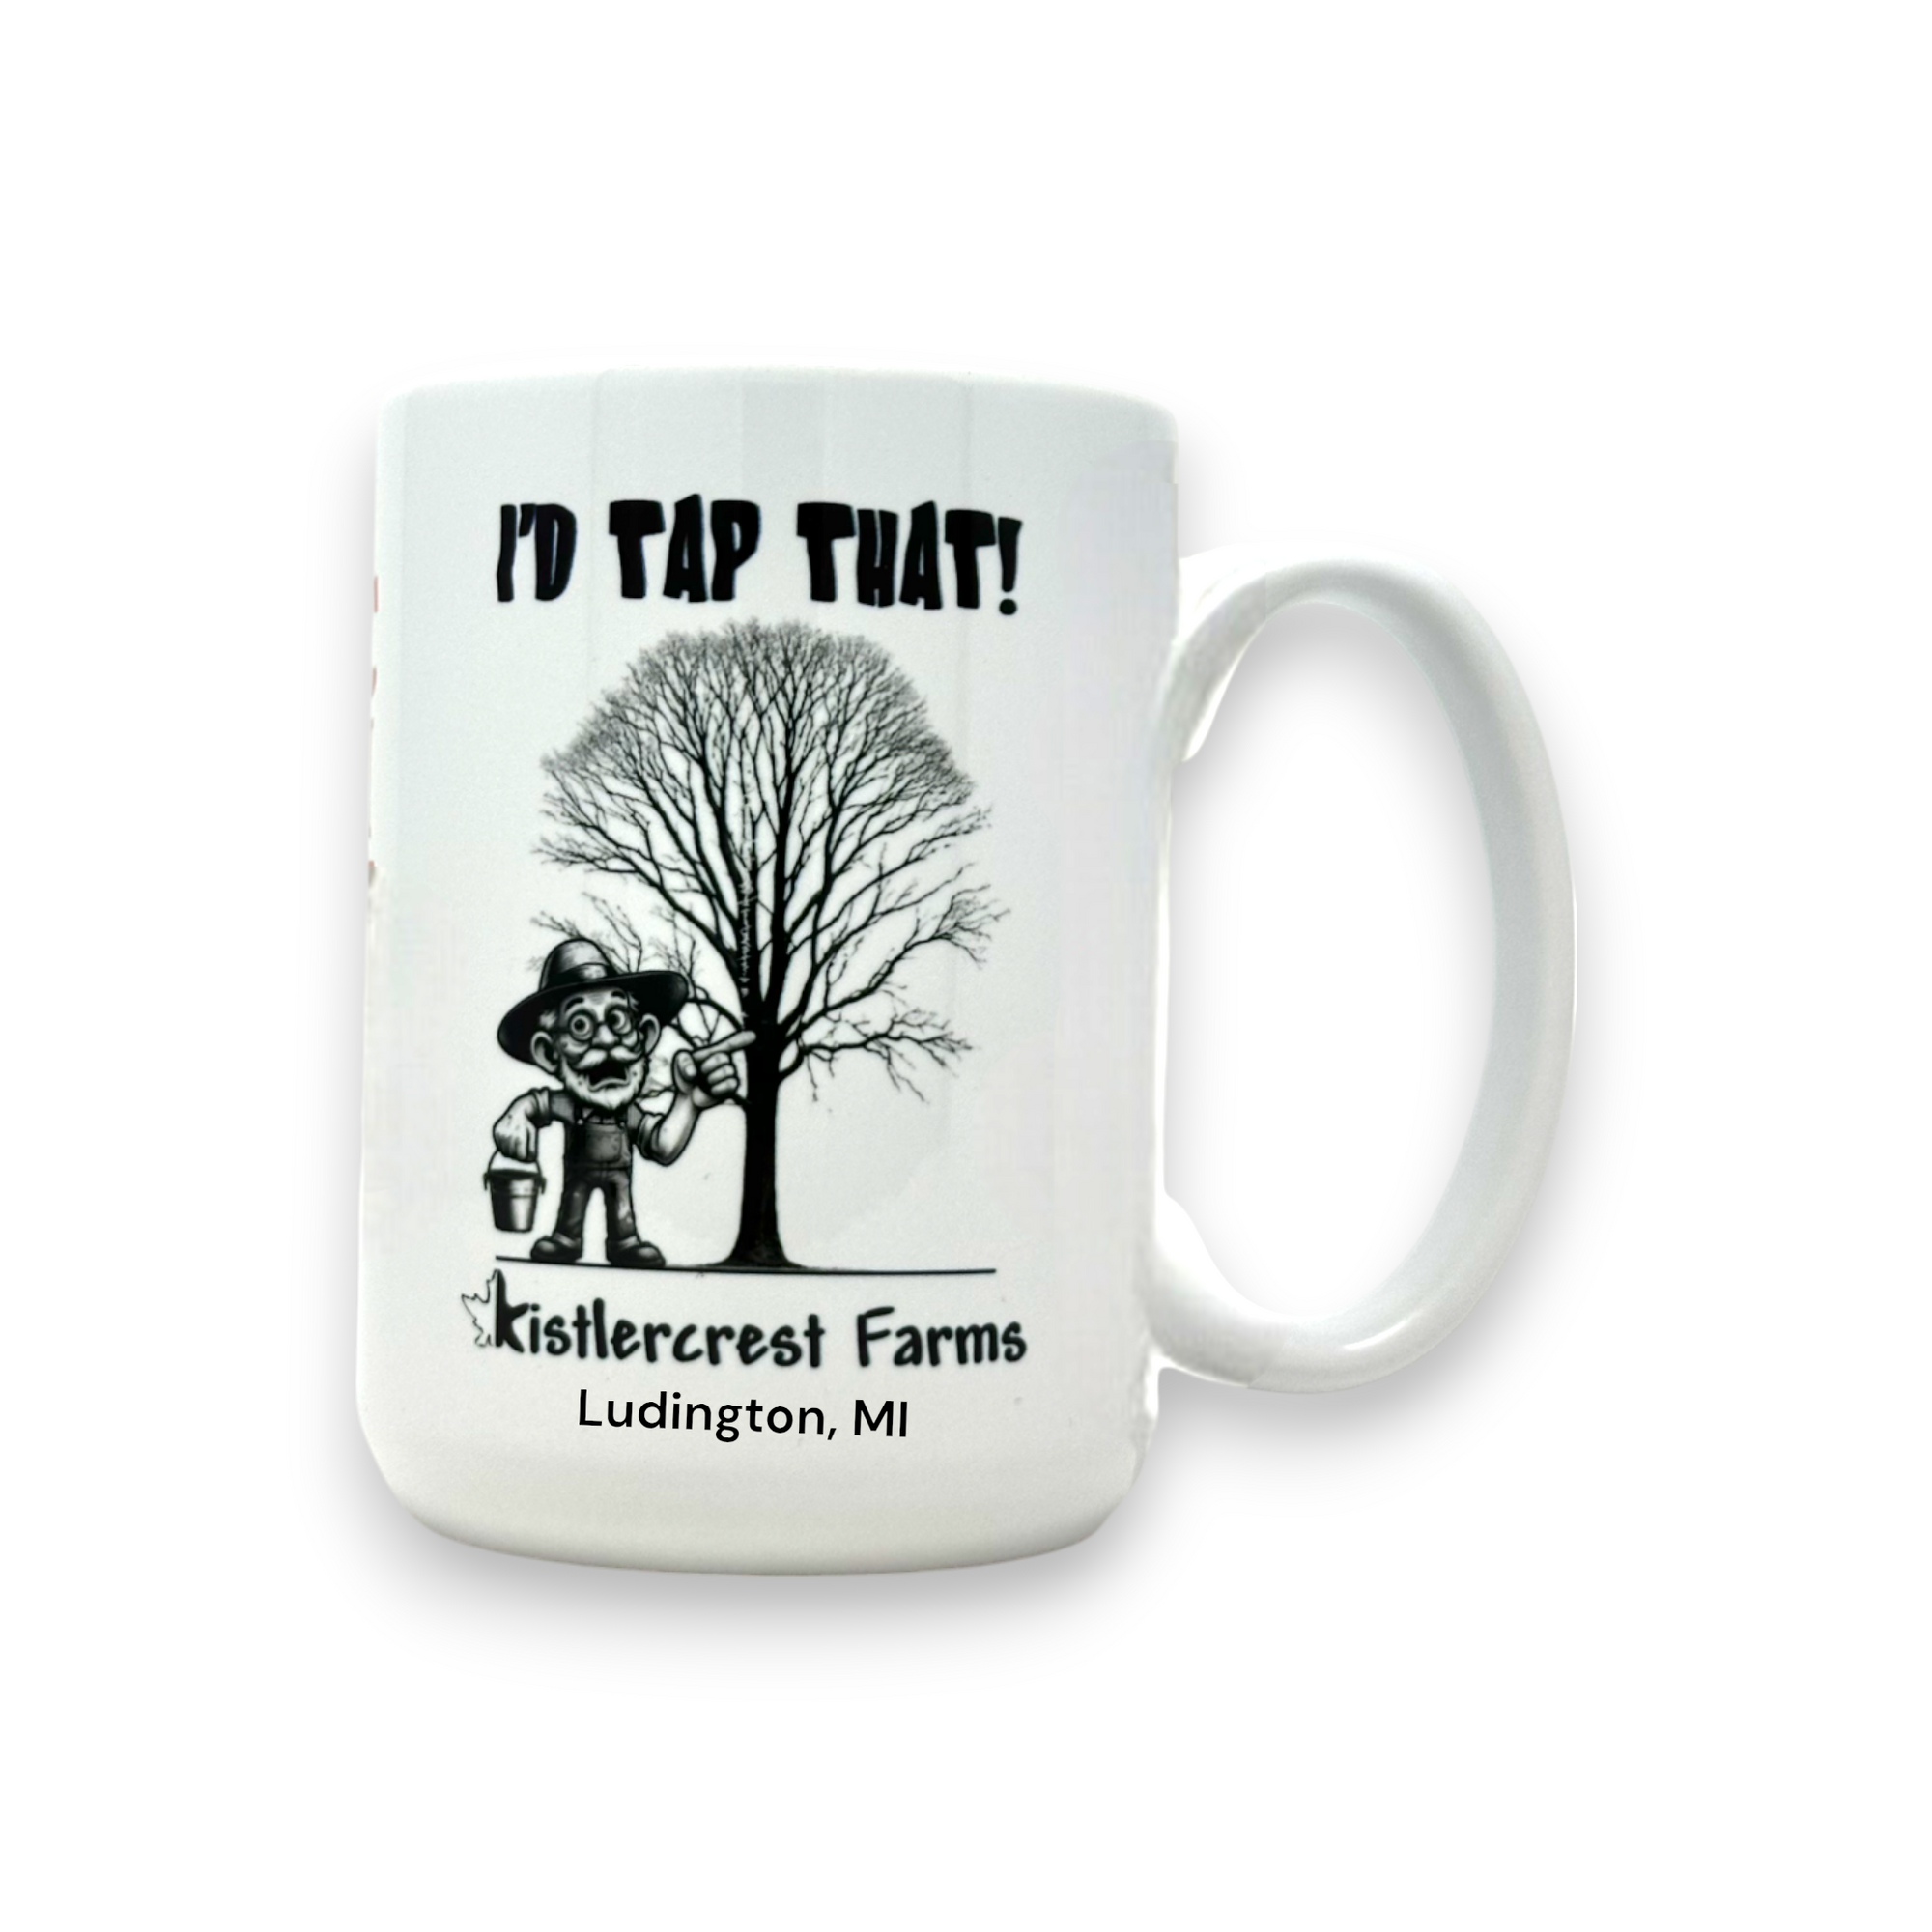 Kistlercrest Farm "I'd Tap That" Coffee Mug.